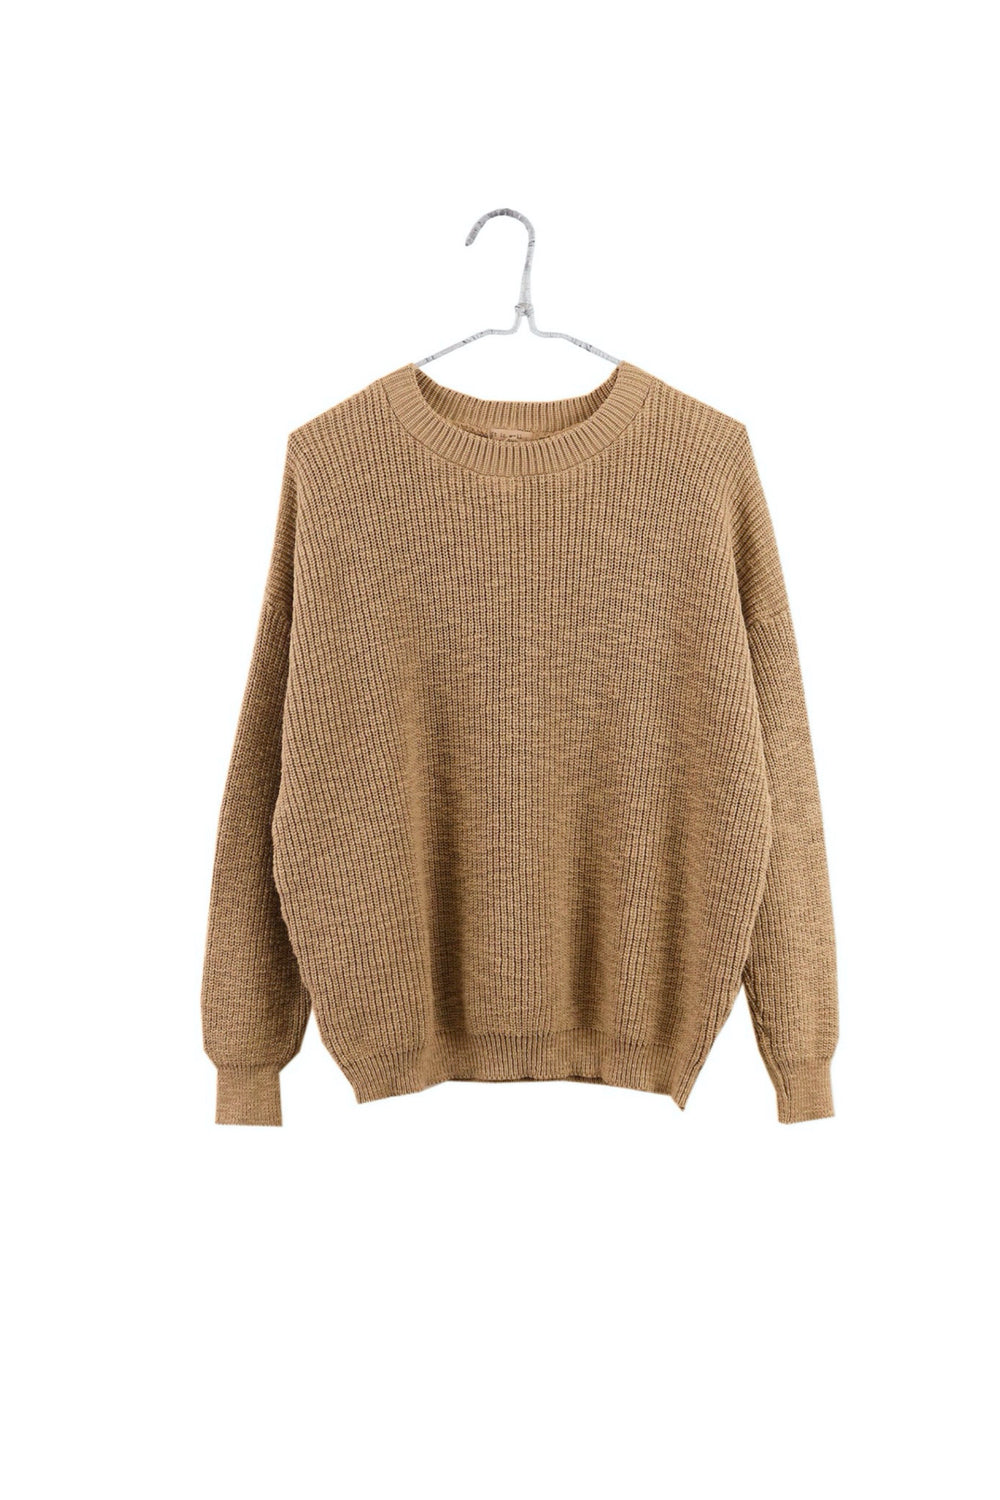 Peachy Tan Pull-On Sweater